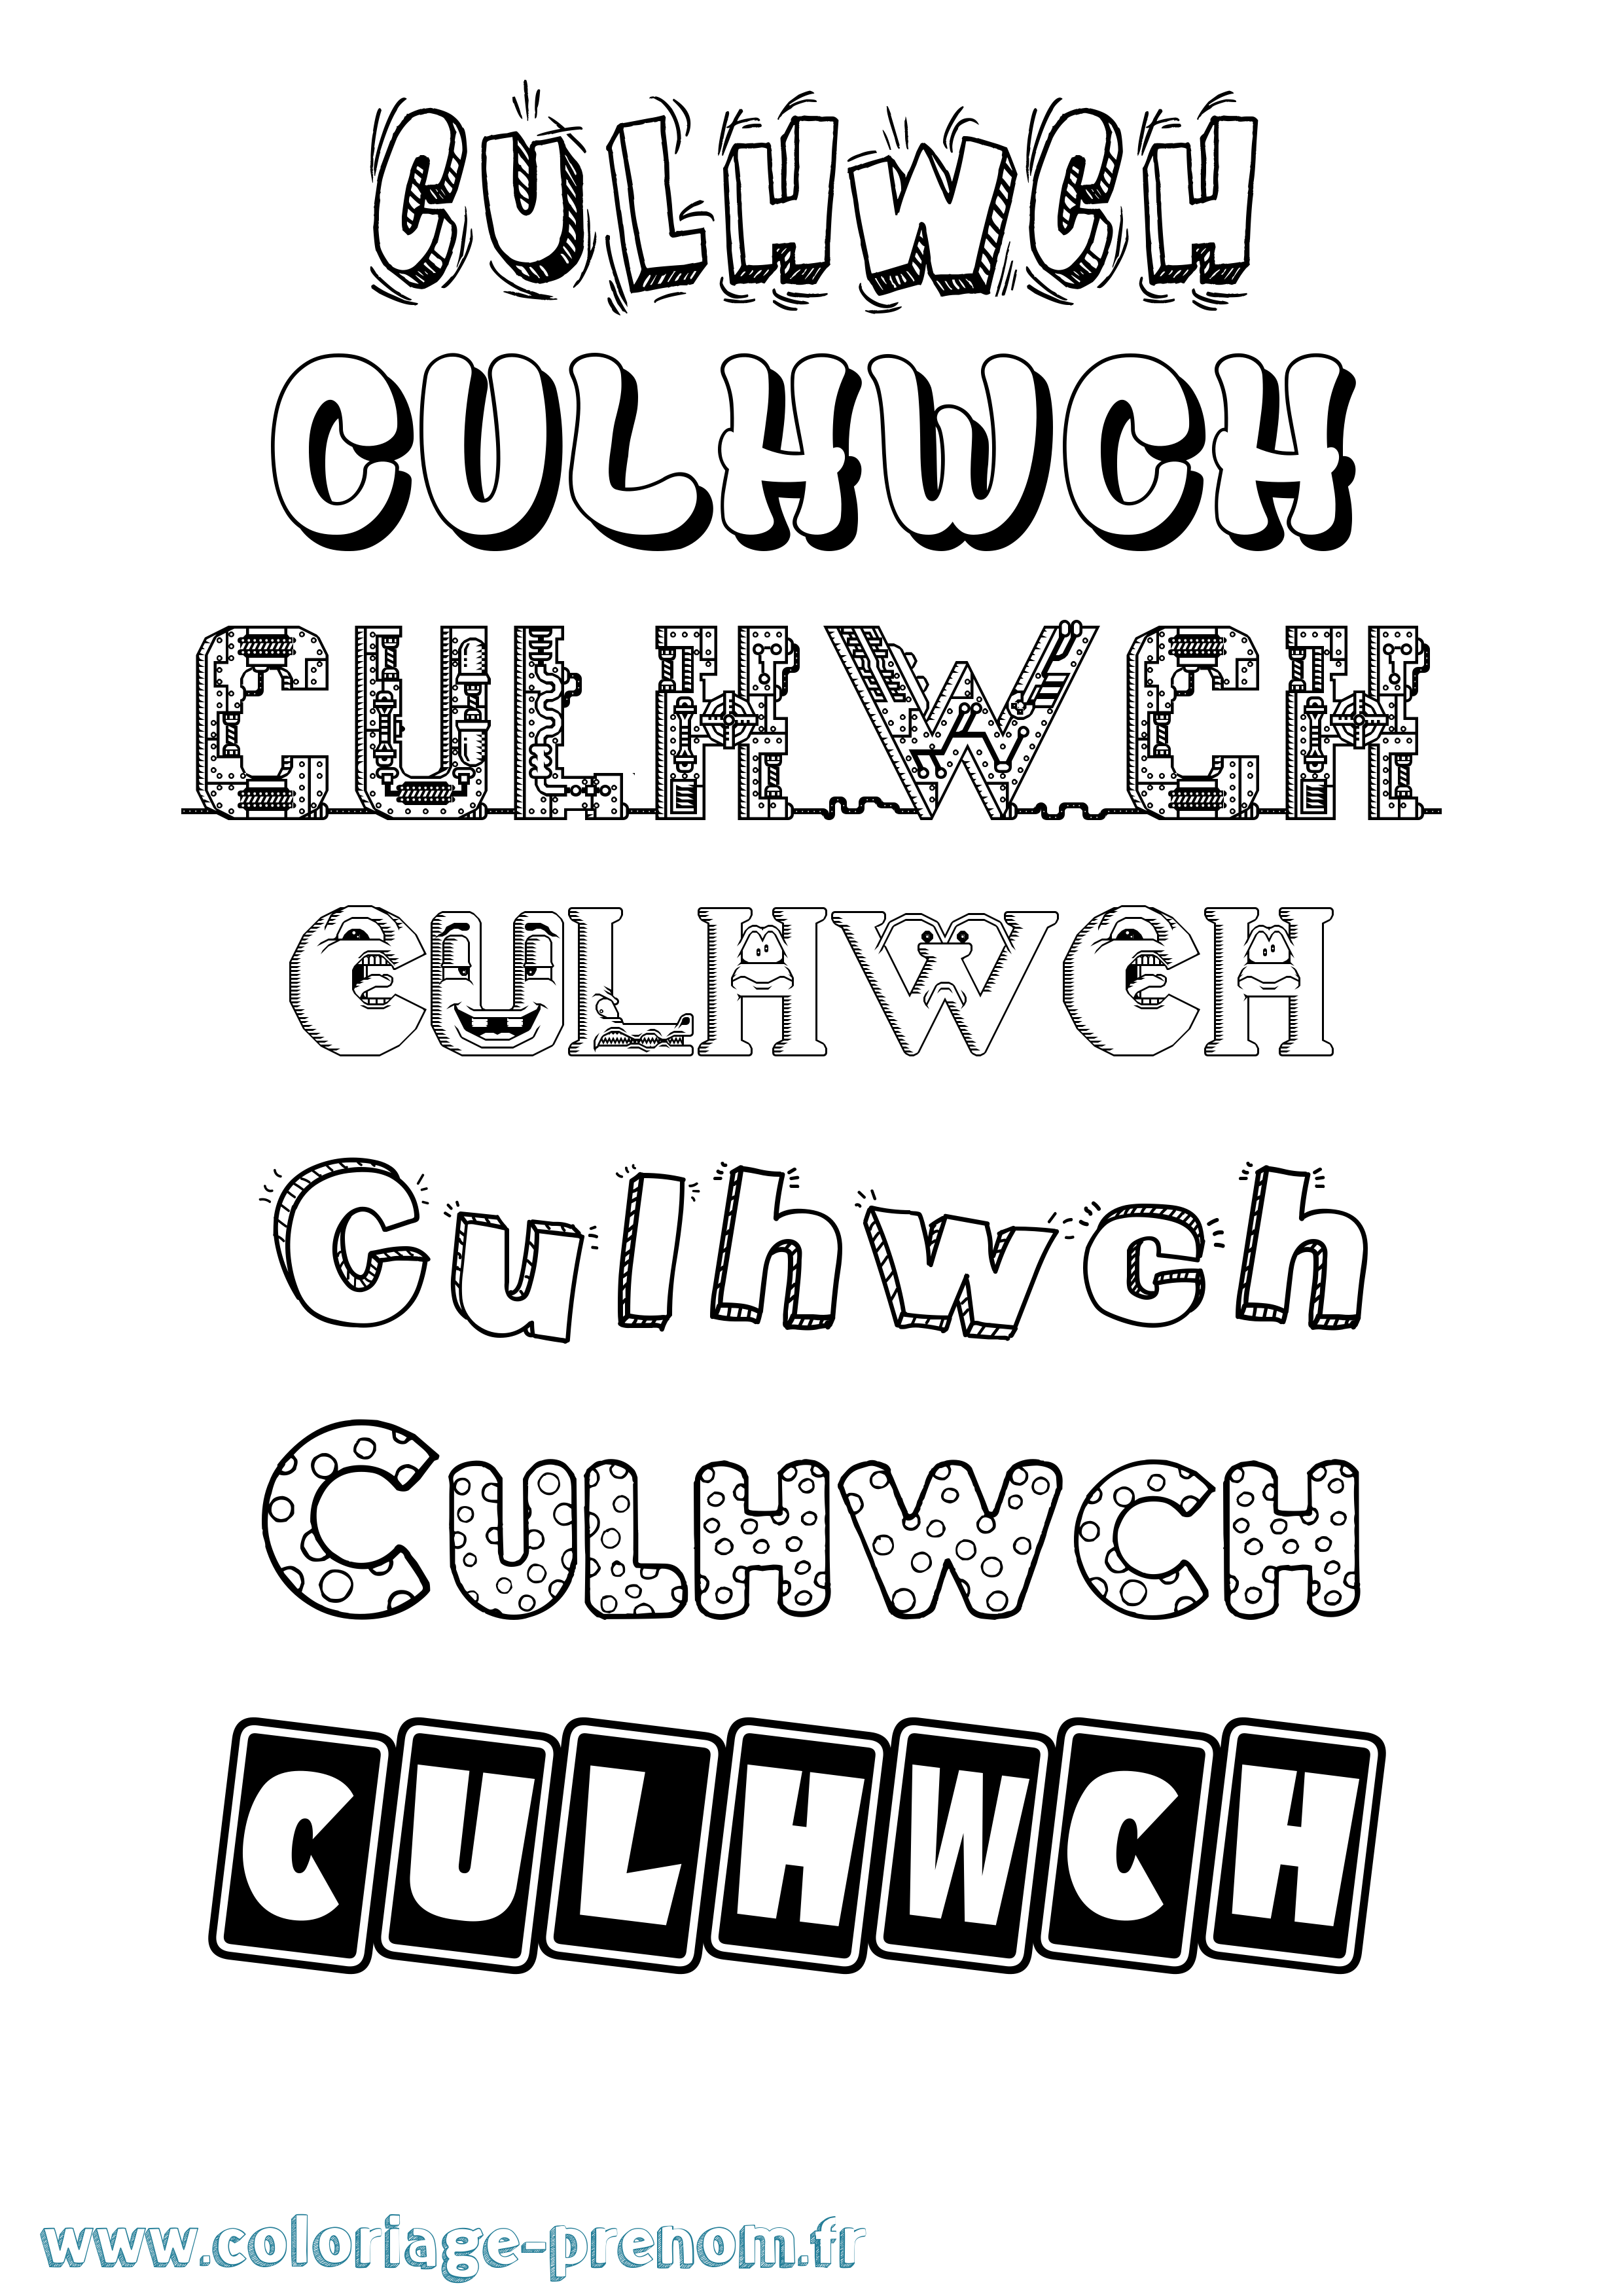 Coloriage prénom Culhwch Fun